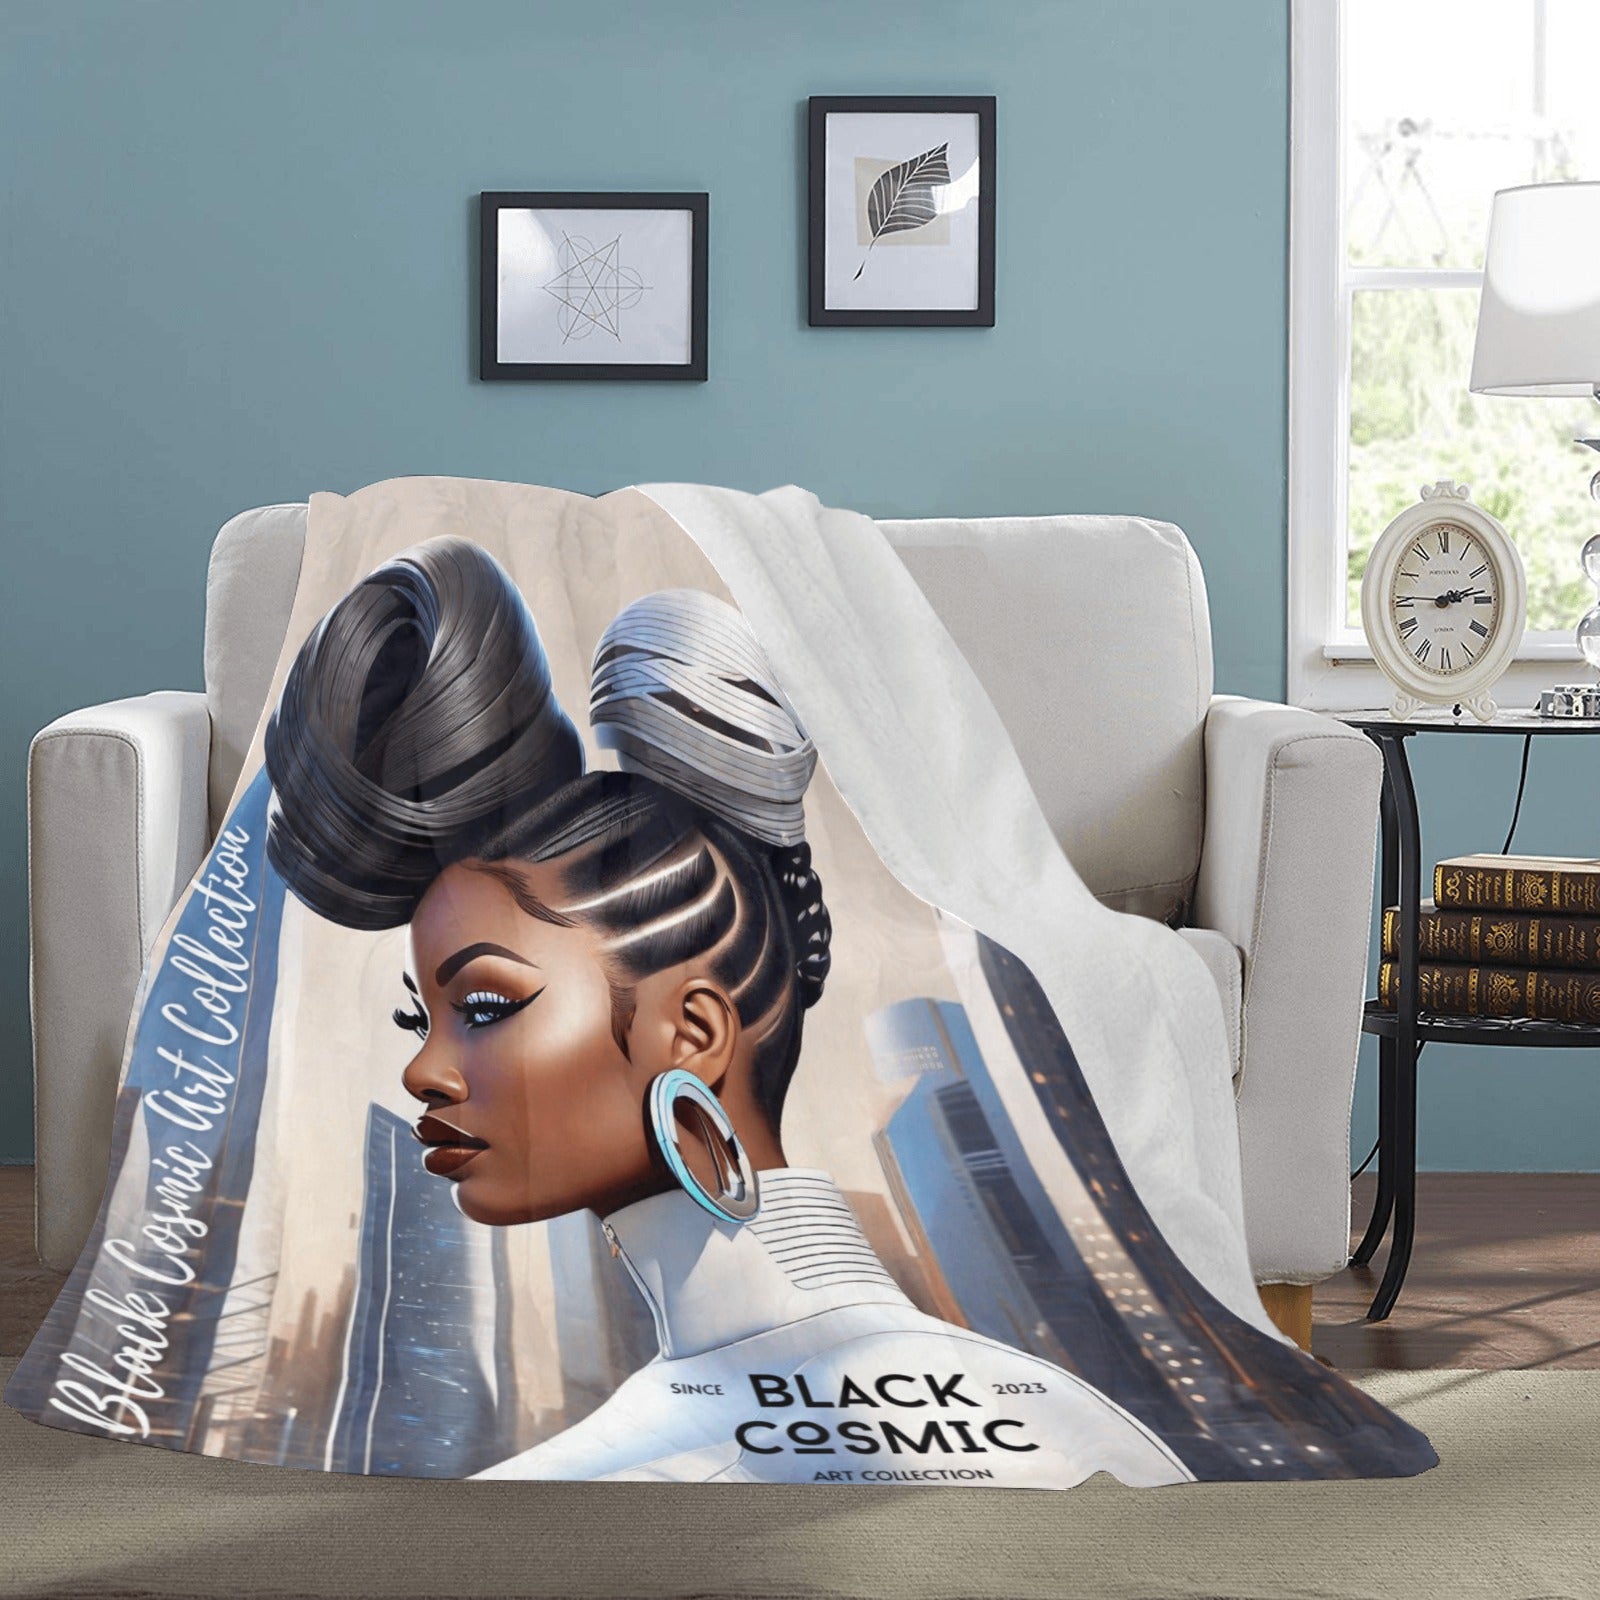 Black Cosmic Art - Ultra-Soft Micro Fleece Blanket ( Multi size in one ) - Dash Trend